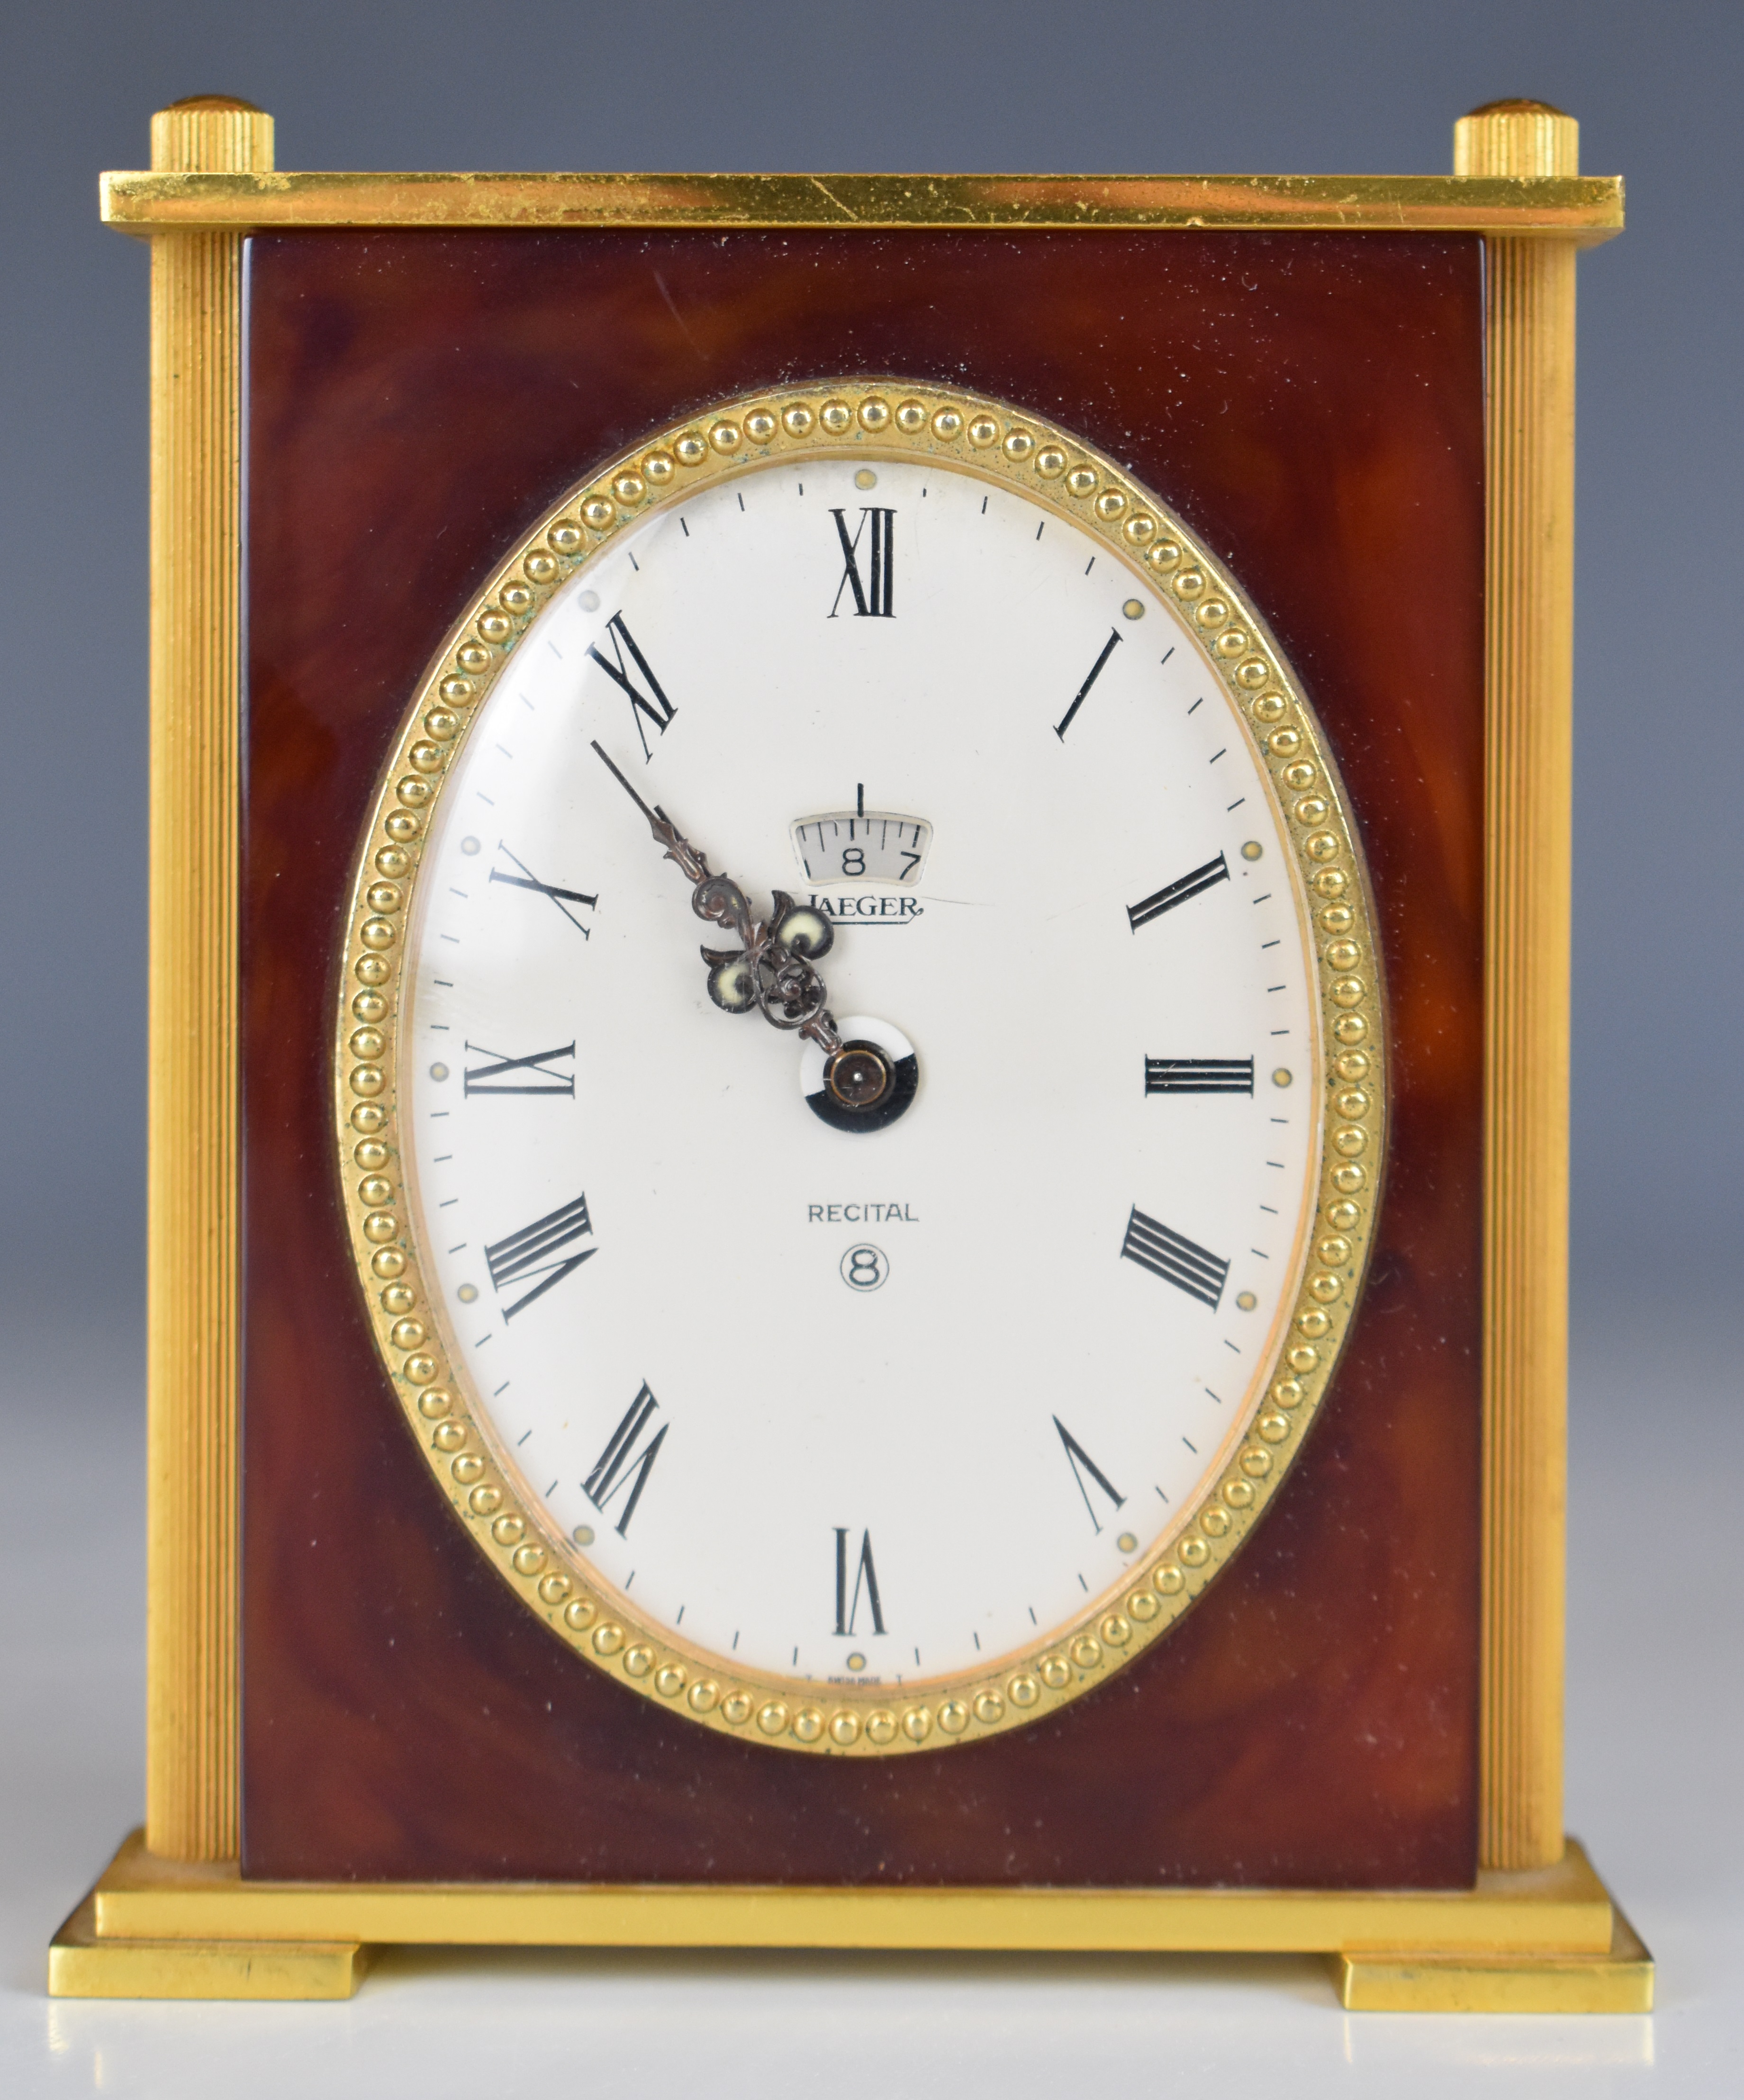 Jaeger (pre LeCoultre) Recital 8 day desk clock with alarm, black Roman numerals, silver dial and